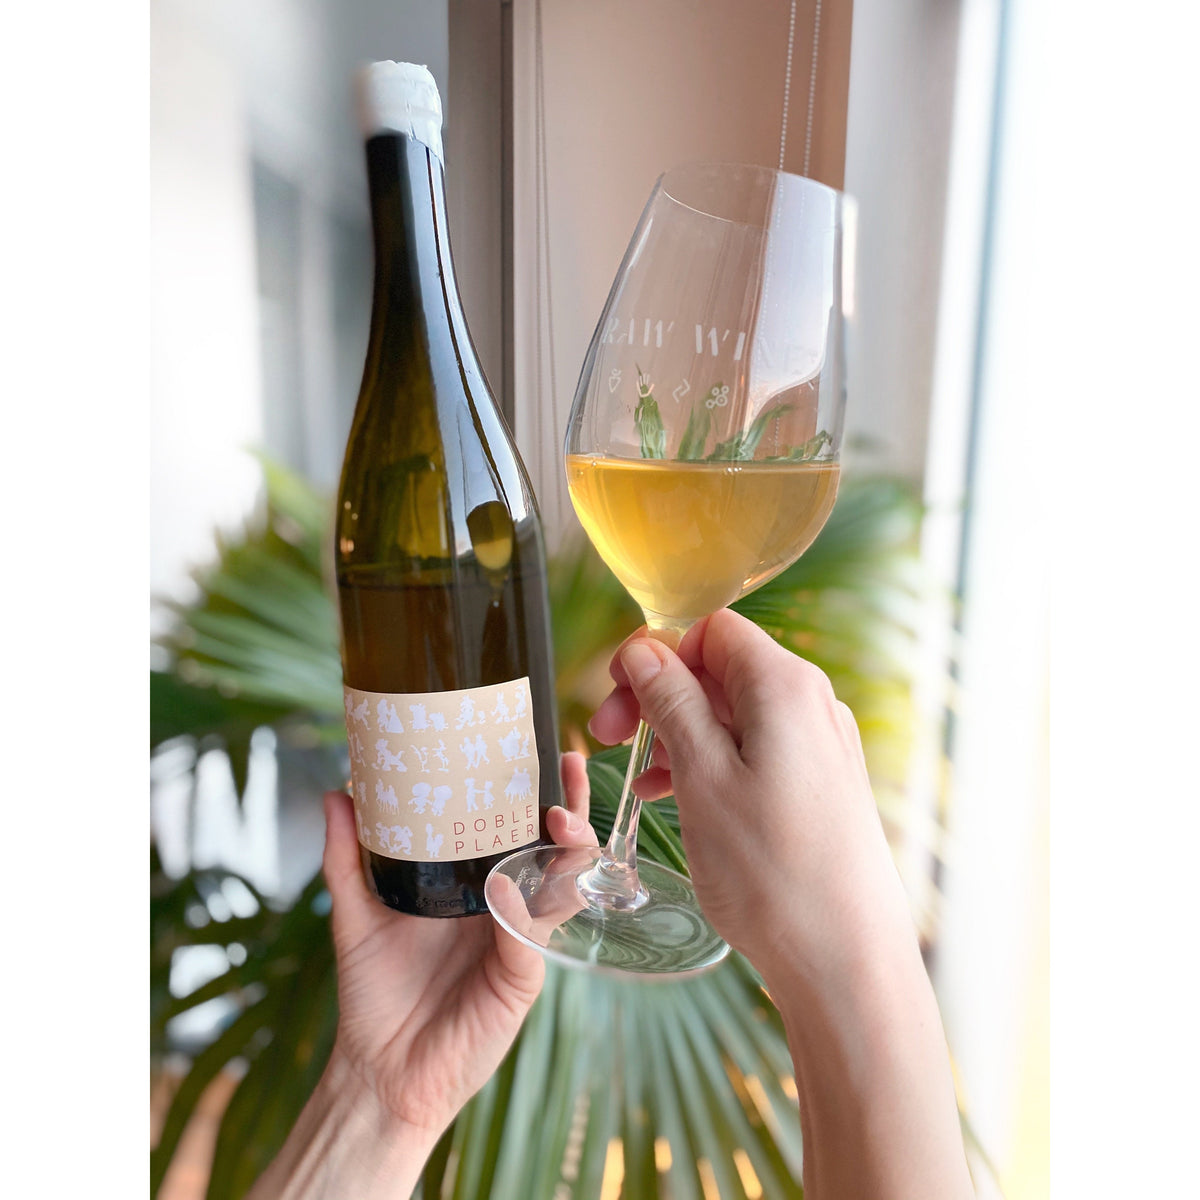 Doble Plaer blanc 2020 - Blanc - Vinyes Singulars - Le vin dans les voiles